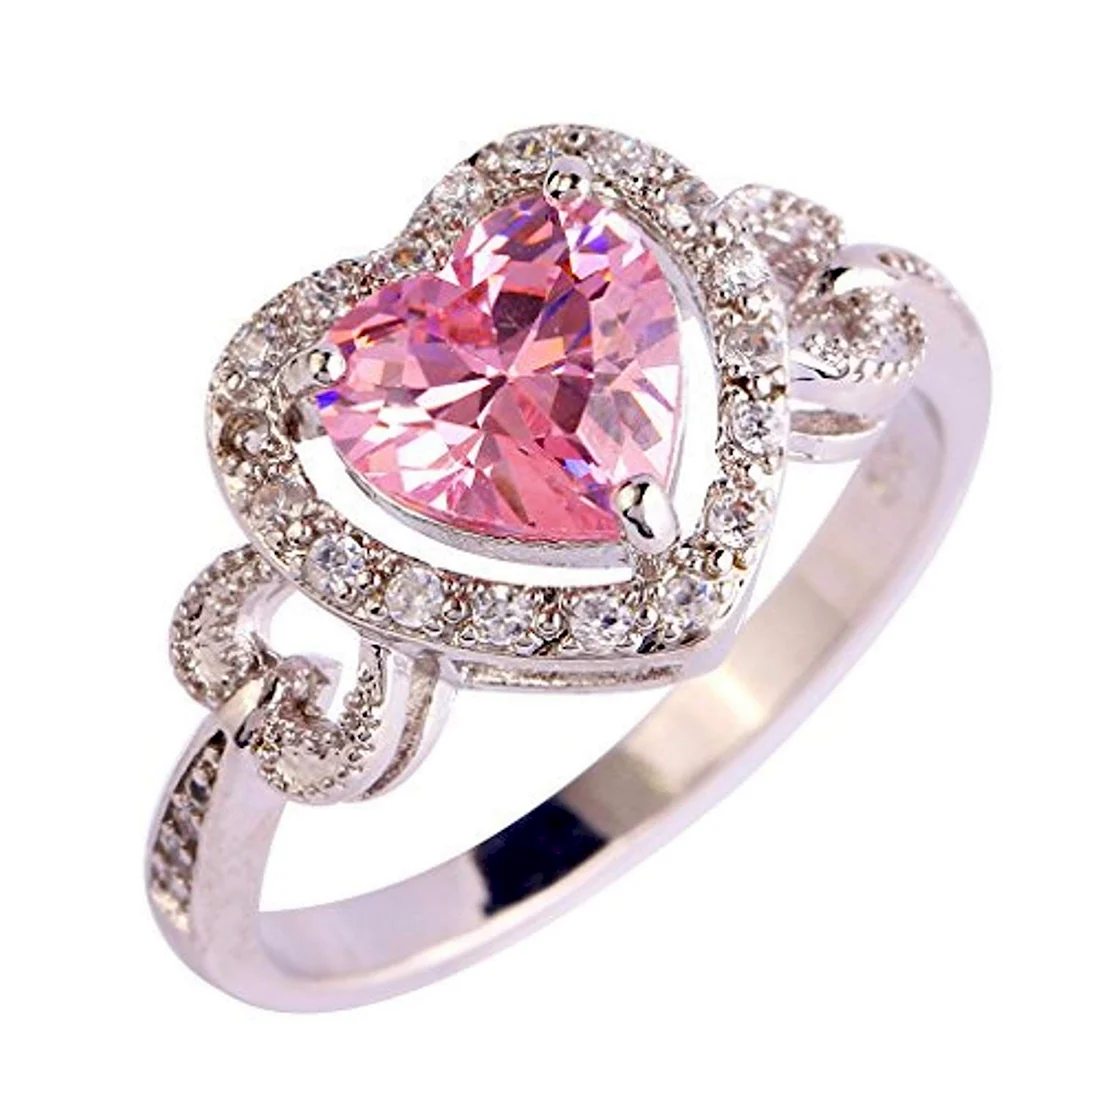 Санлайт кольца серебро с розовым камнем